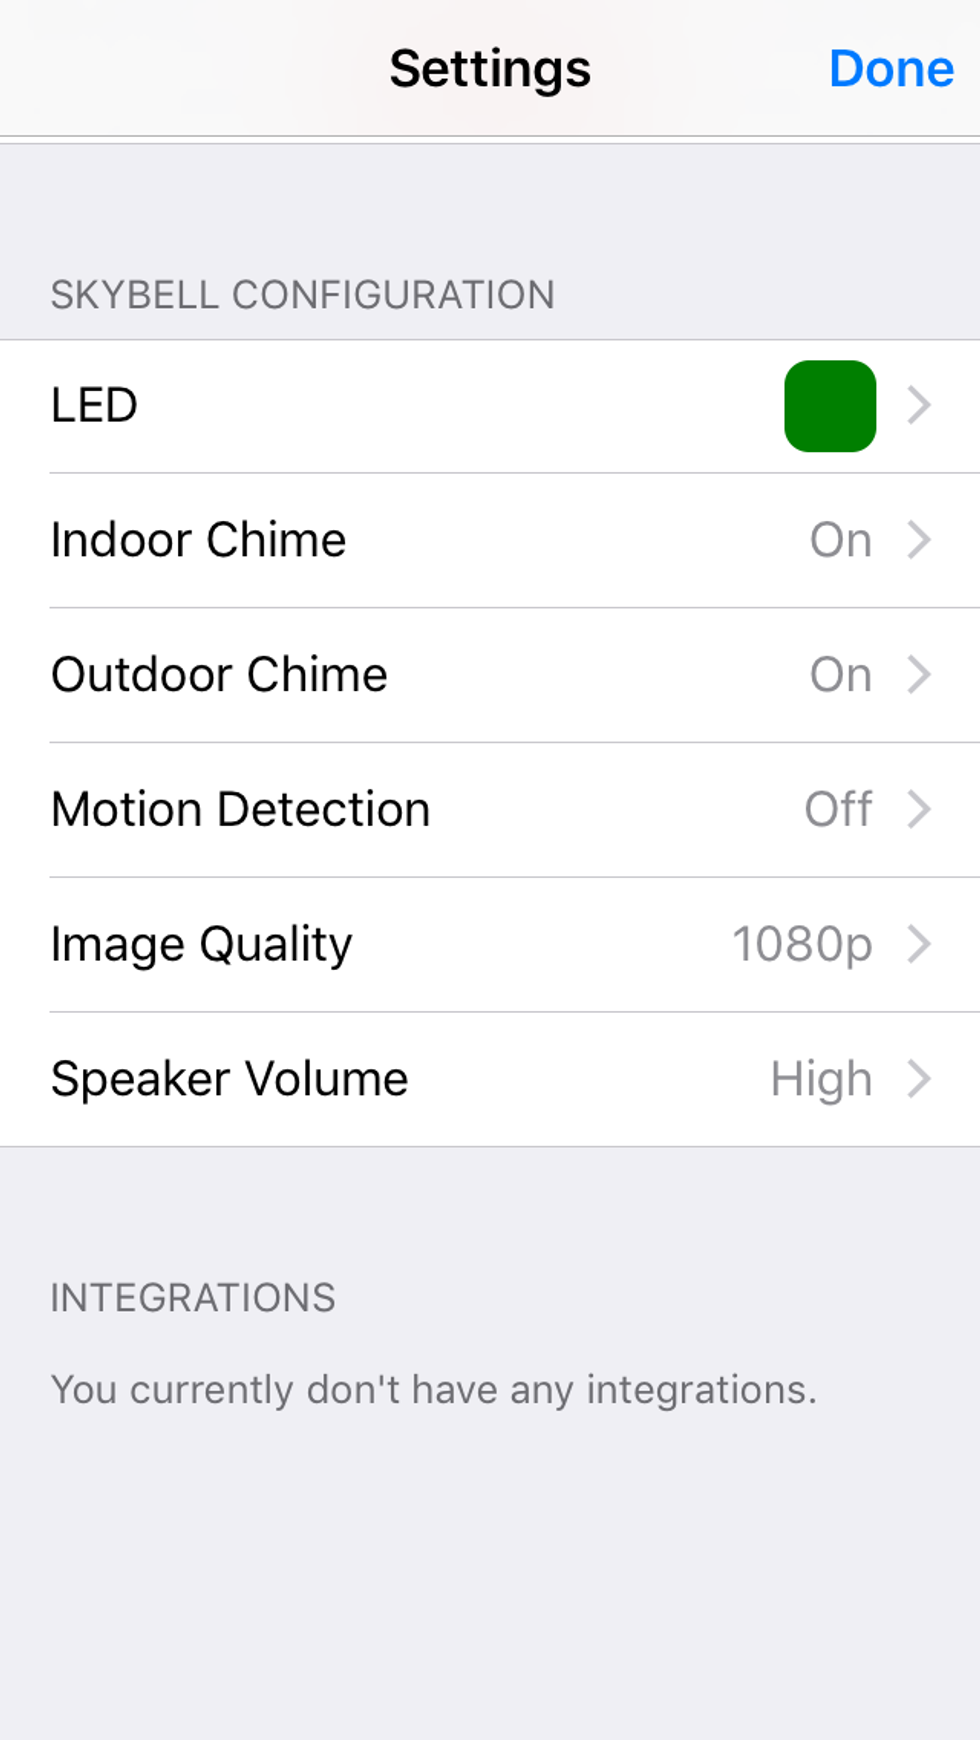 photo of skybell mobile app settings screen